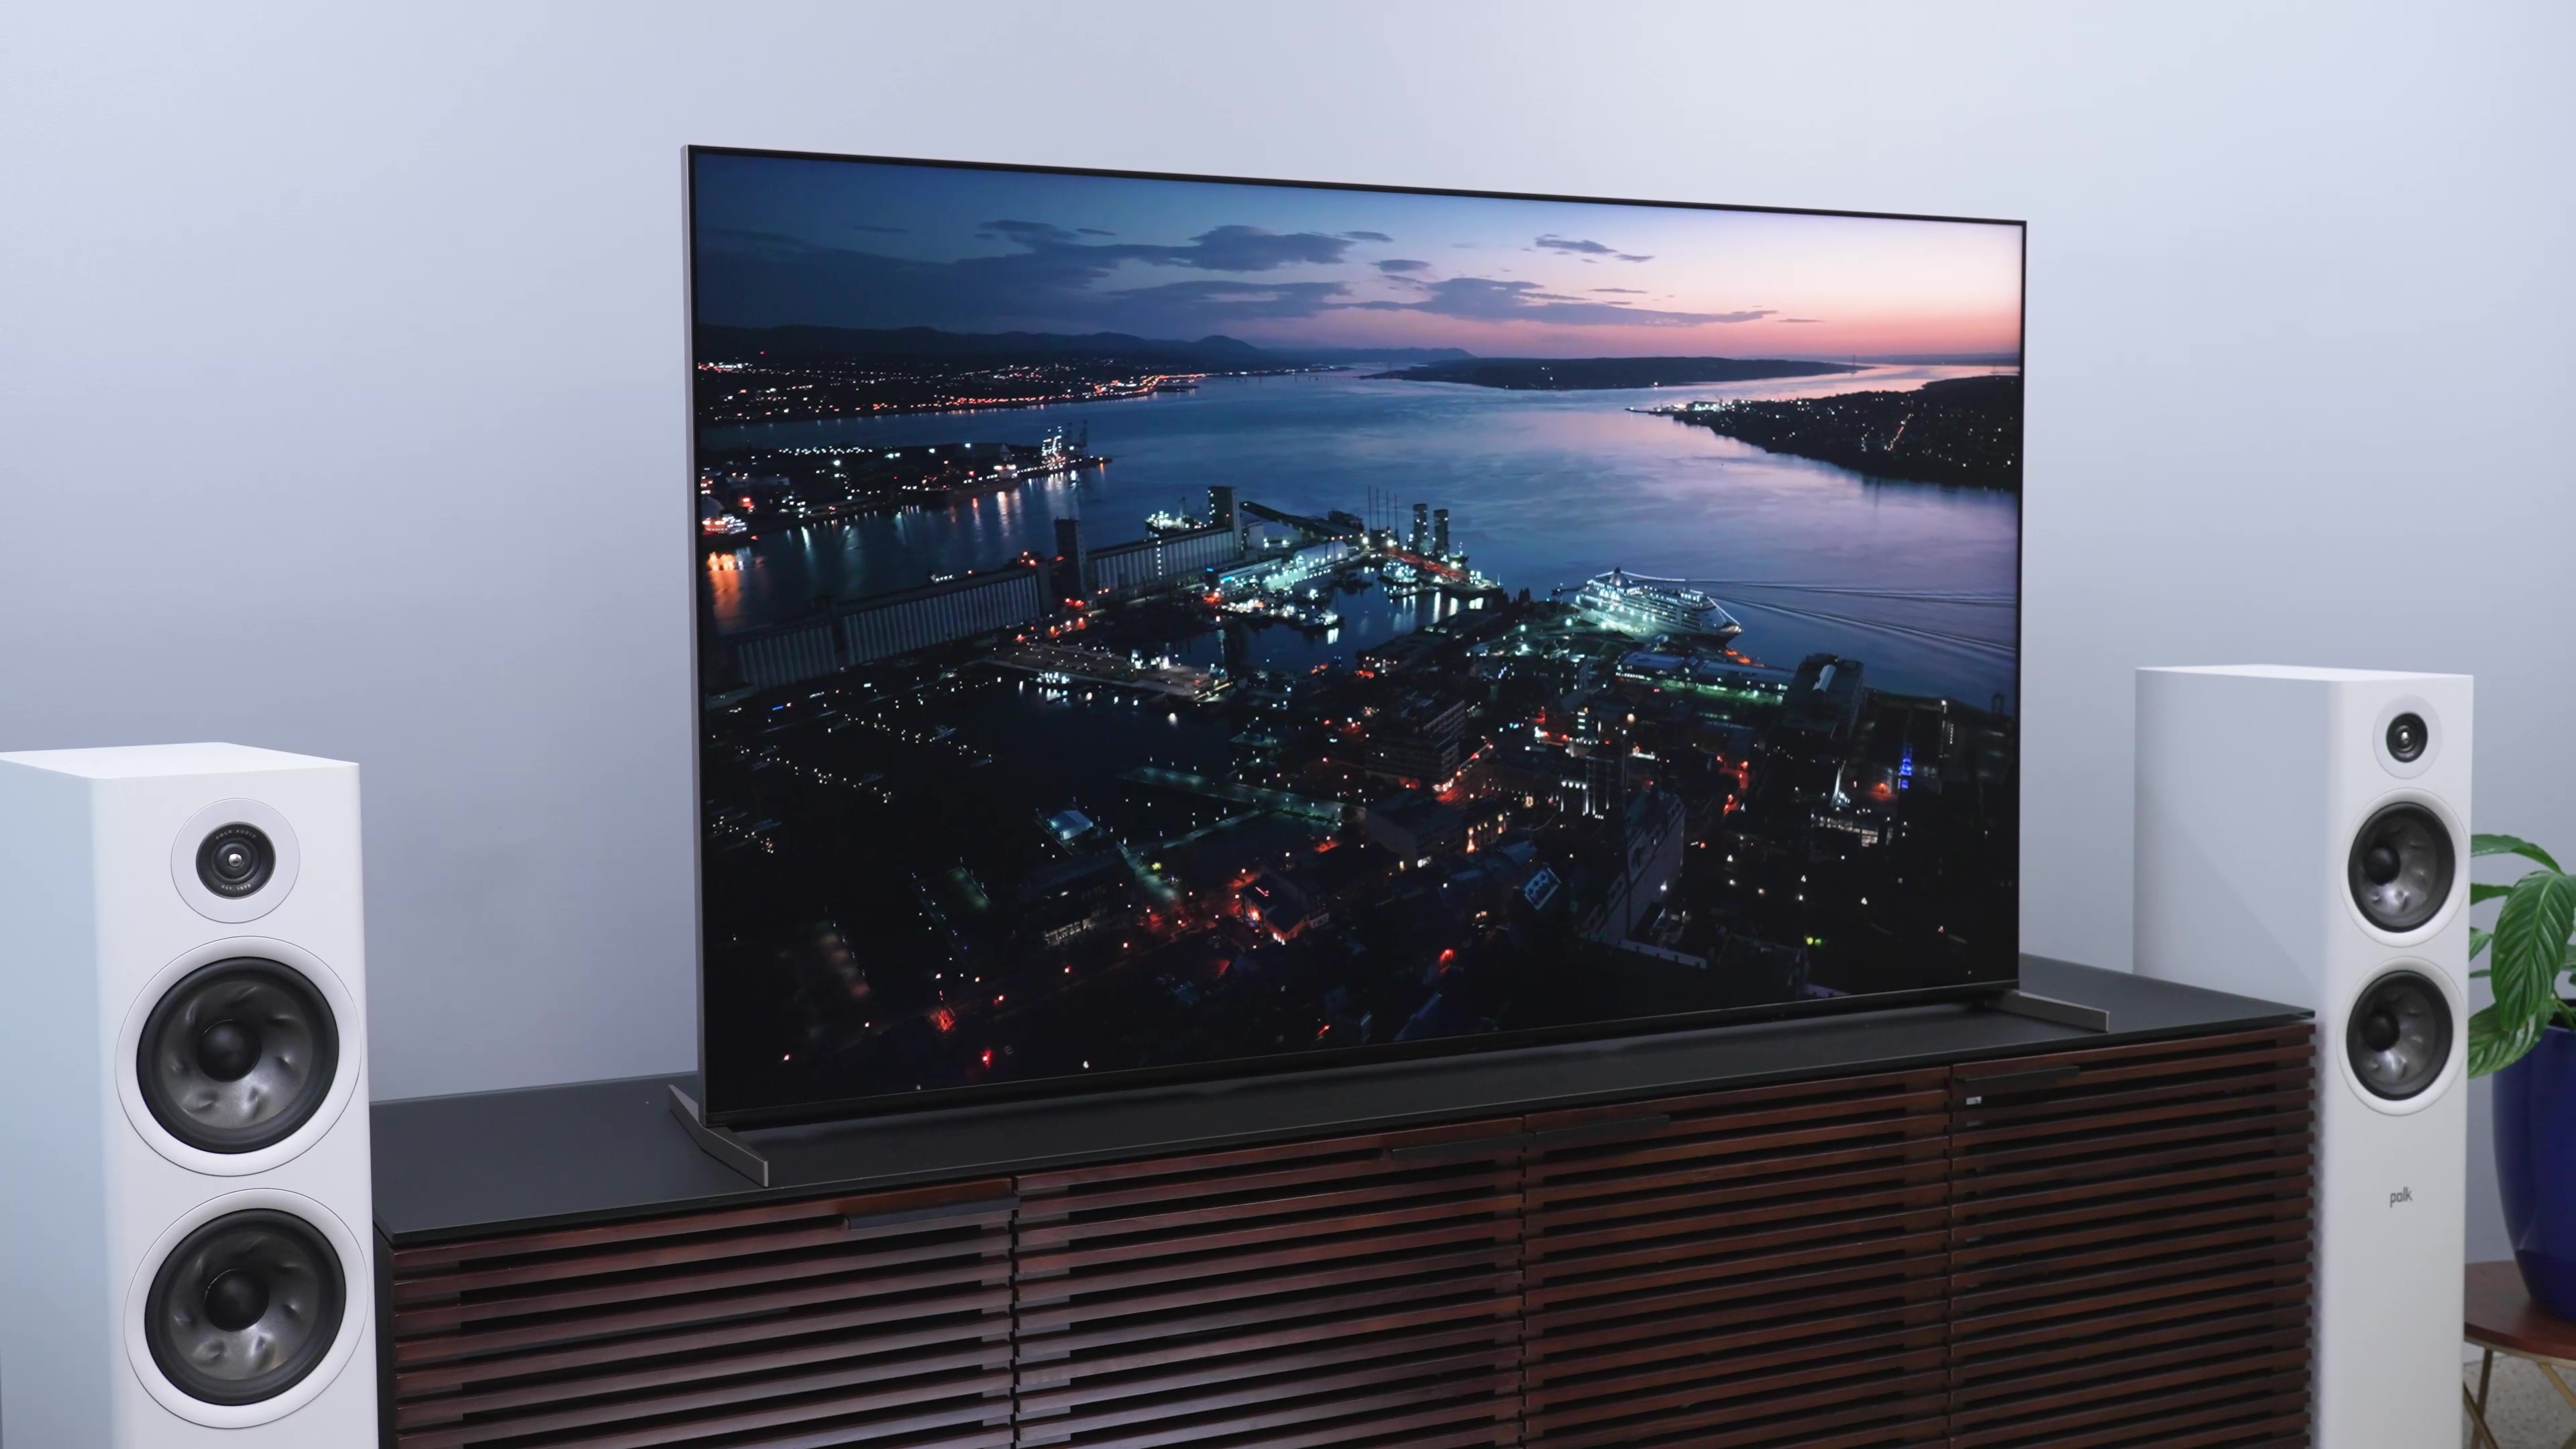 Testbericht zum Sony Bravia X93L 4K-Fernseher mit Mini-LED